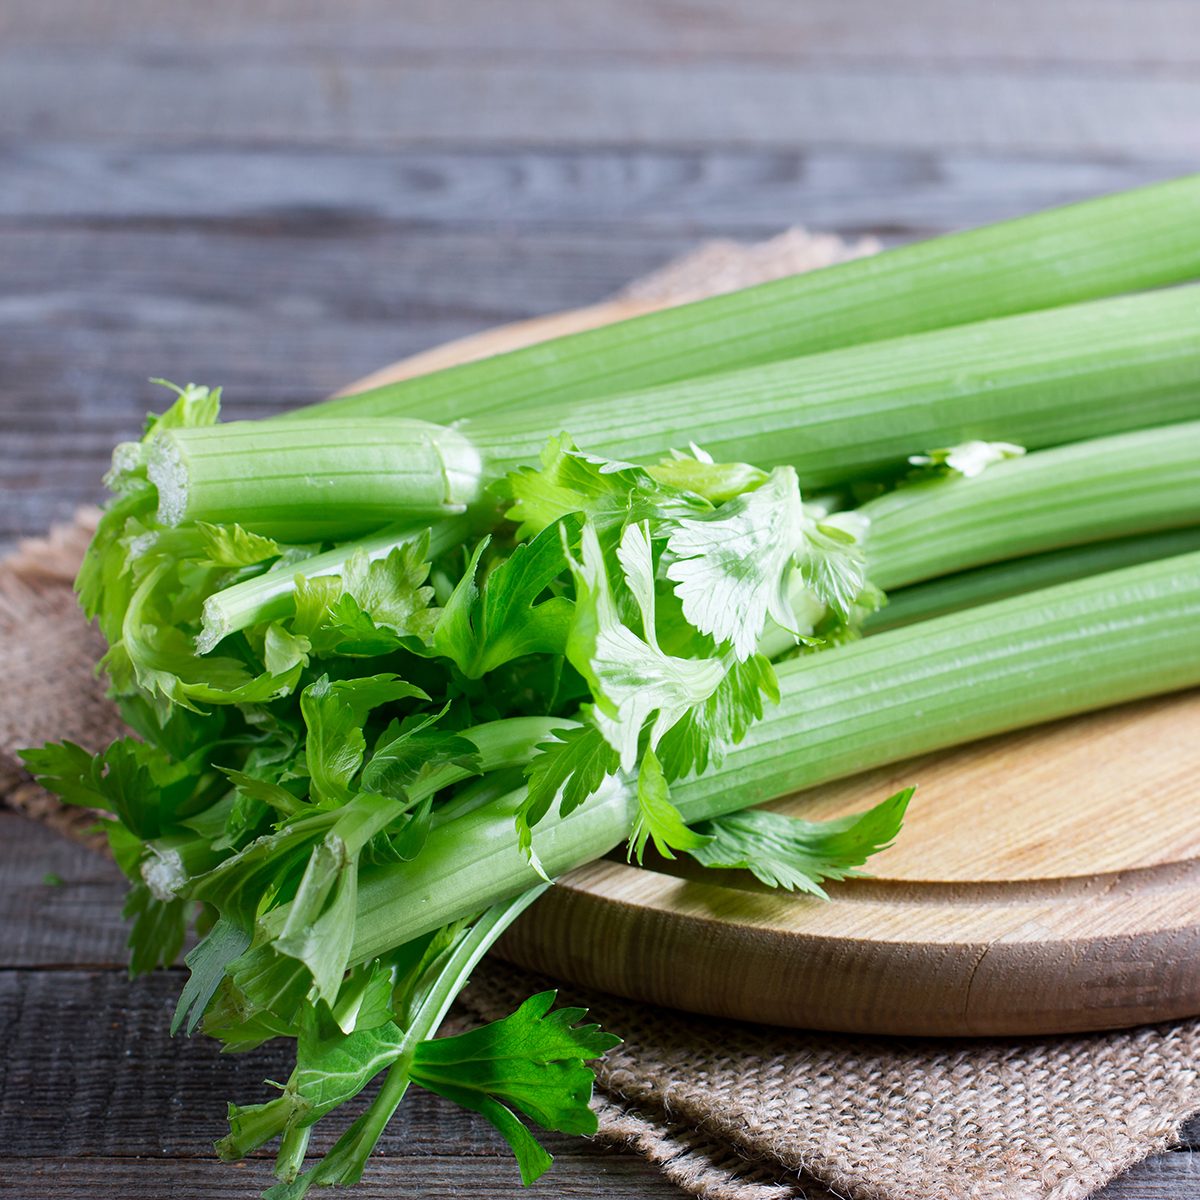 Fresh green celery stems on wooden cutting board